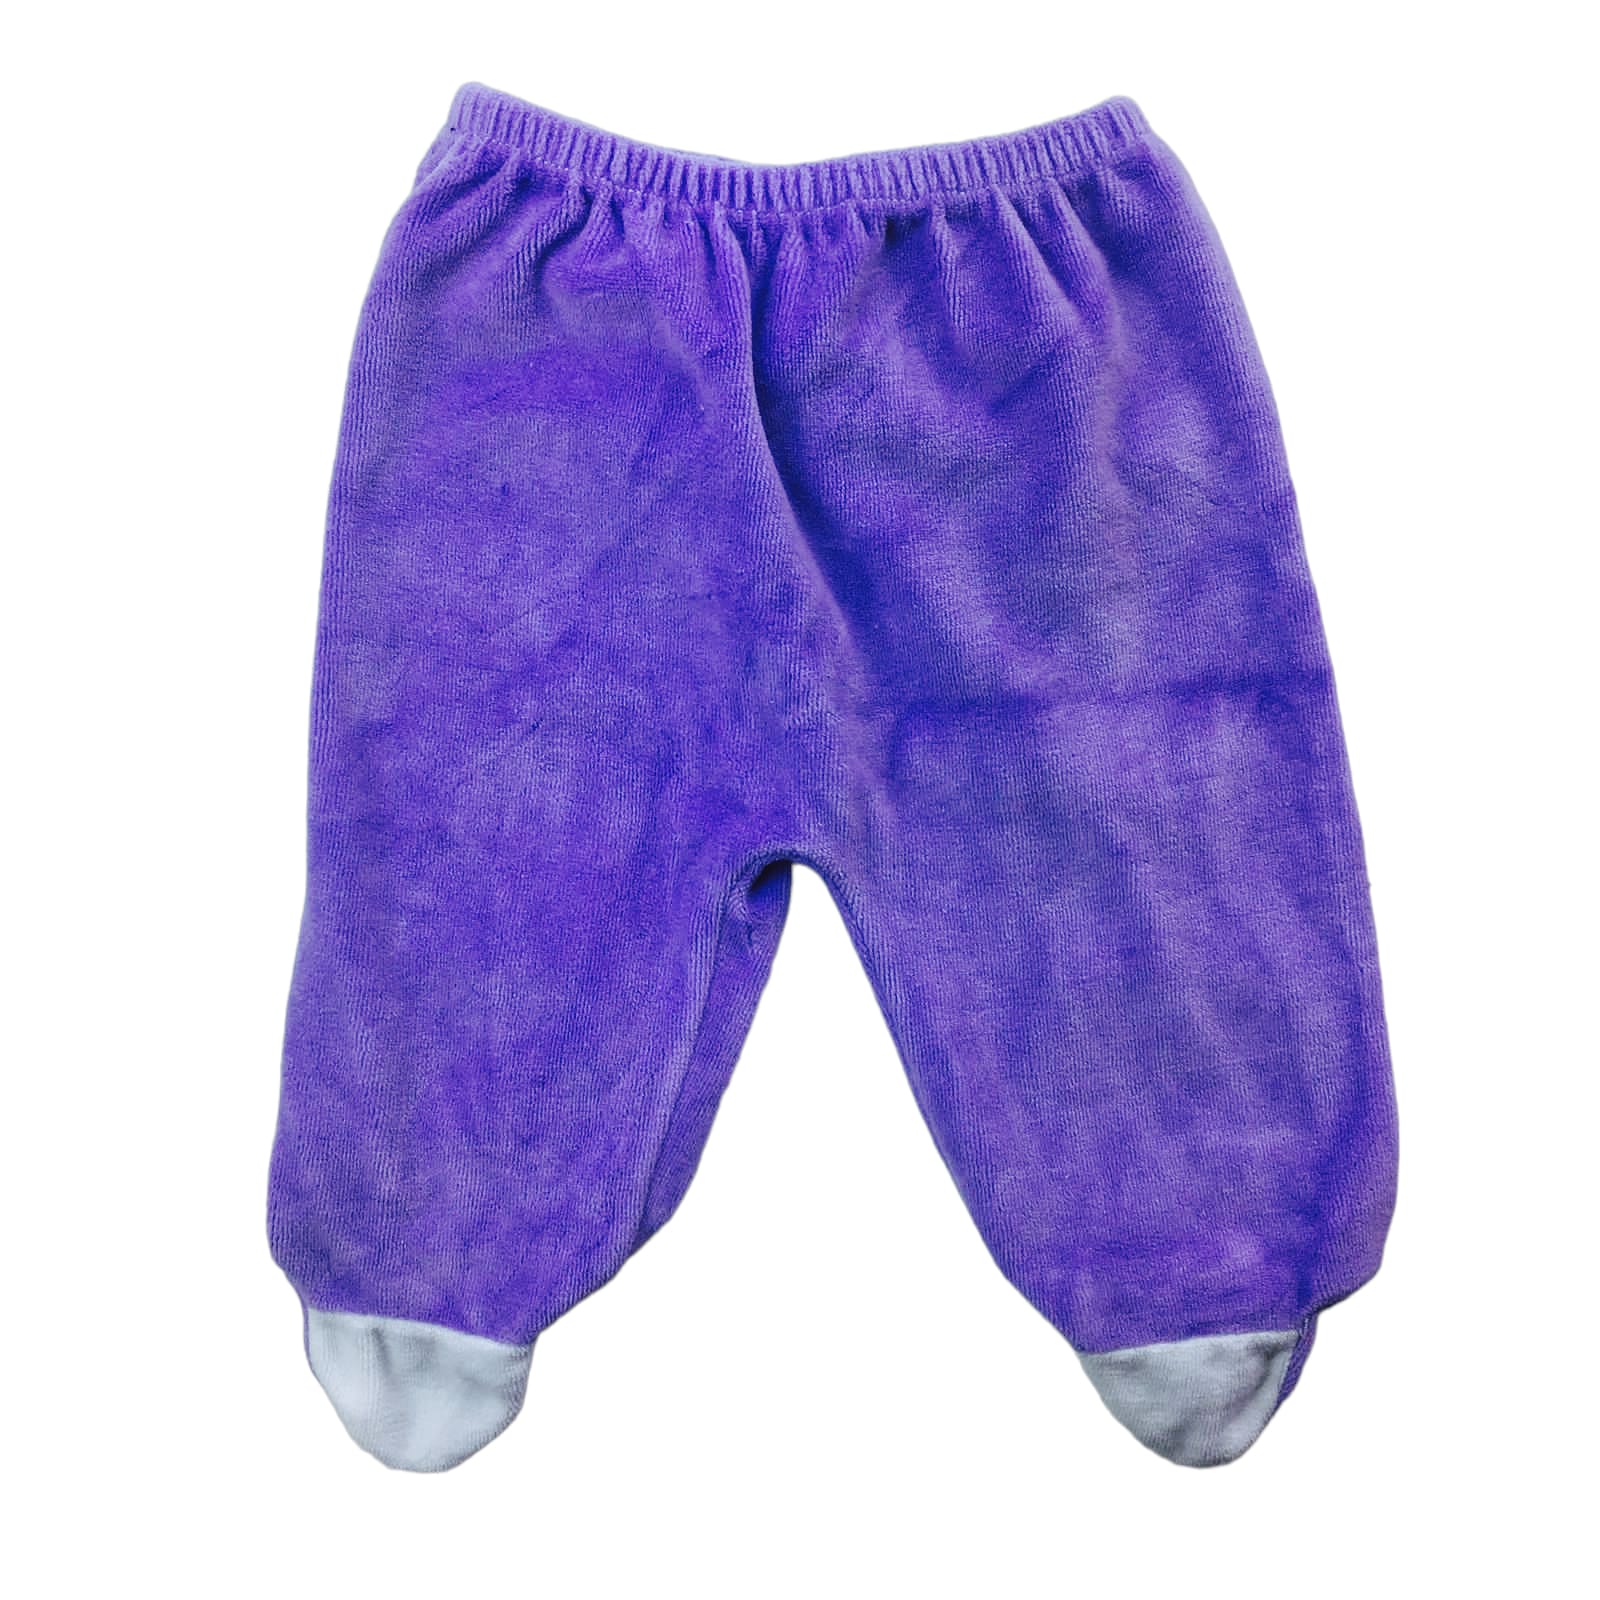 Panty de Plush lila con blanco